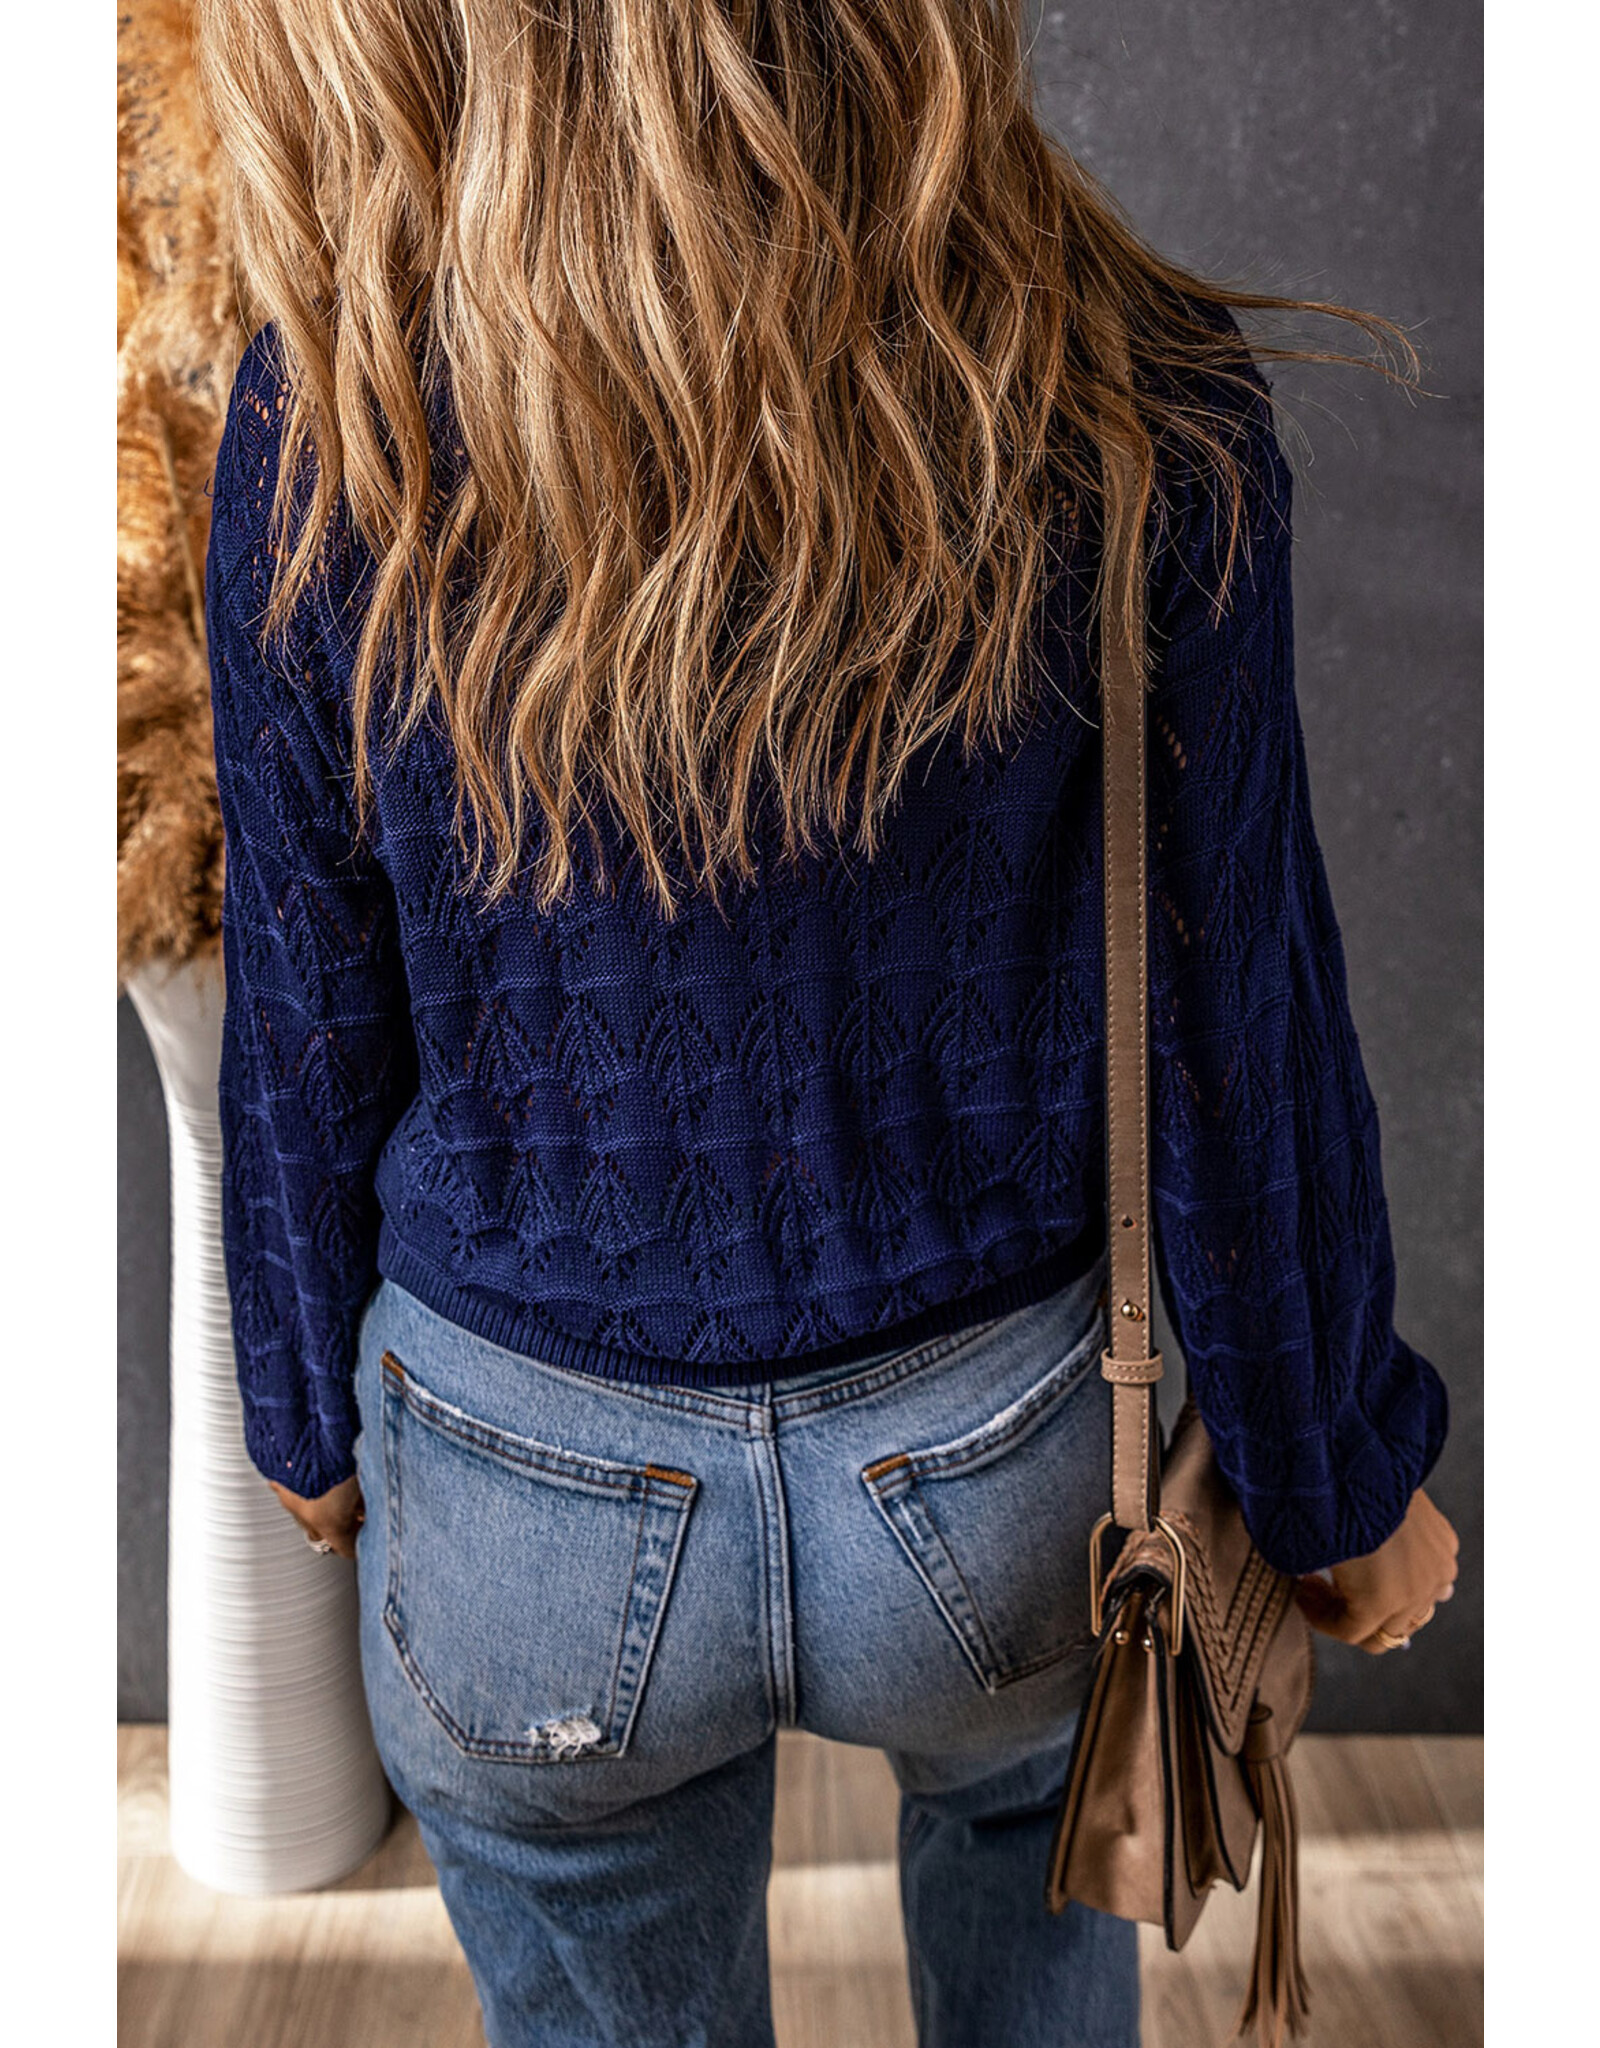 LATA Blue crochet knit cardigan sweater